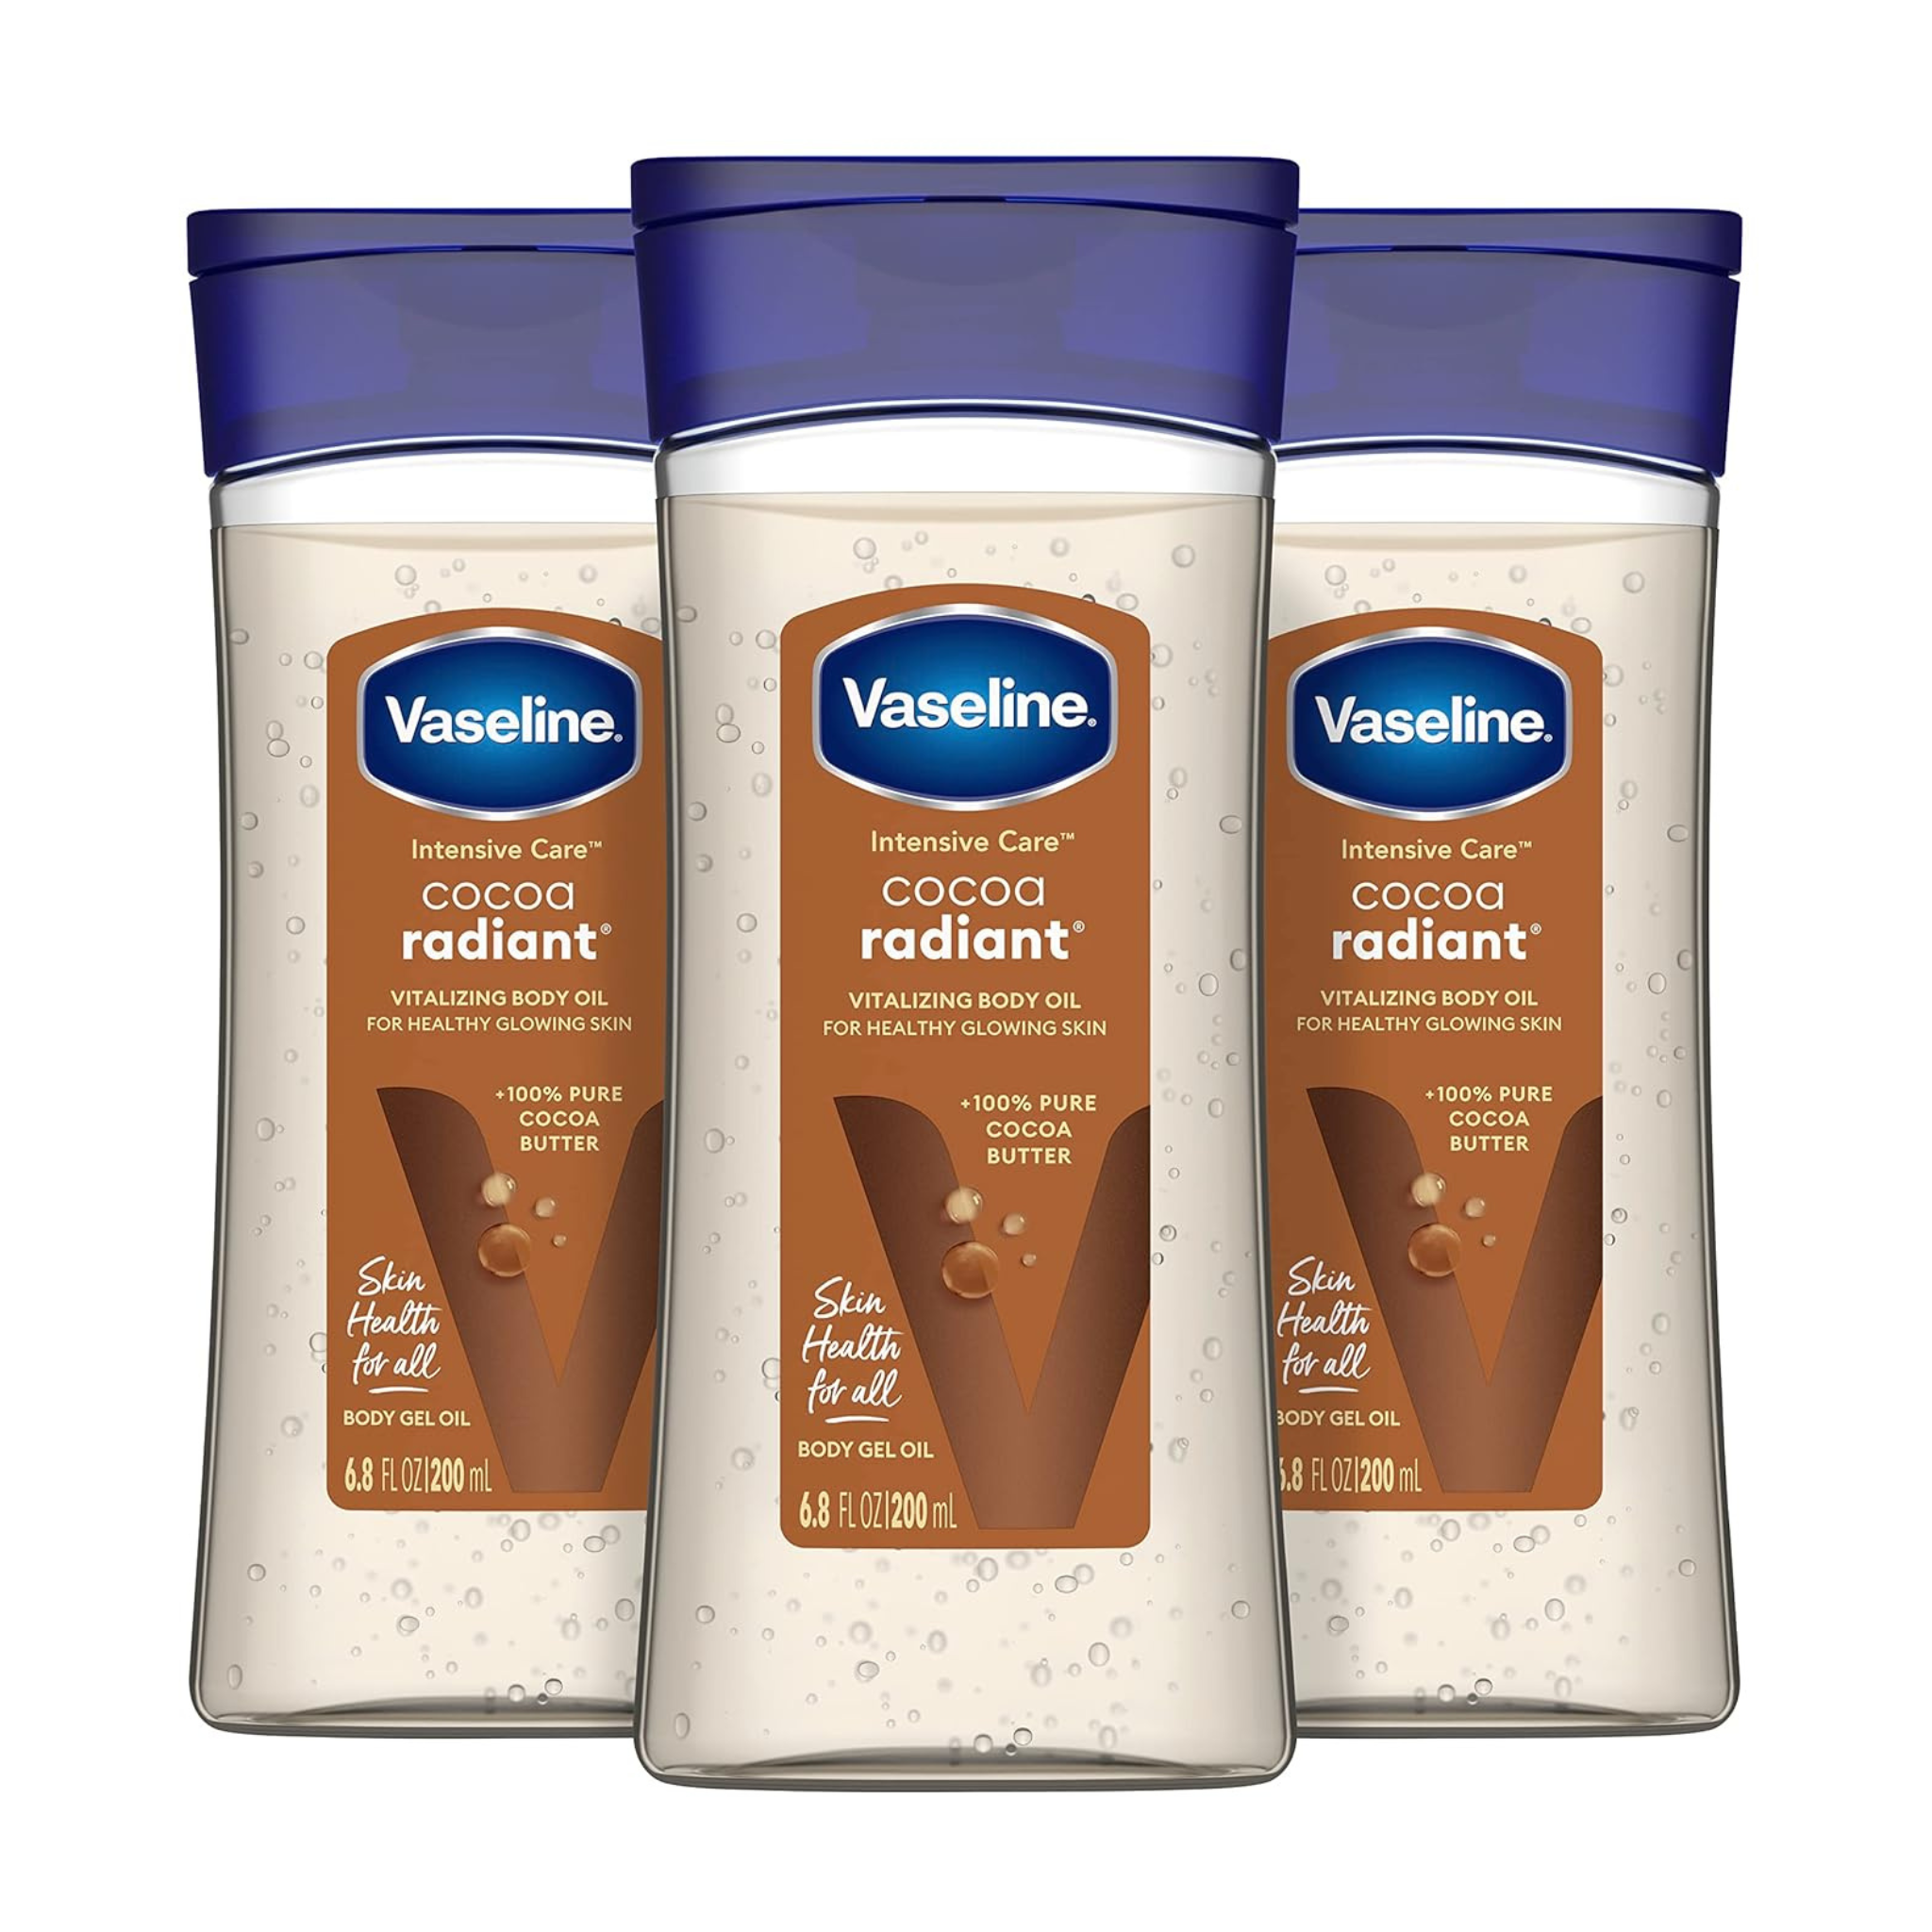 3 Vaseline Intensive Care Cocoa Radiant Vitalizing Body Oils